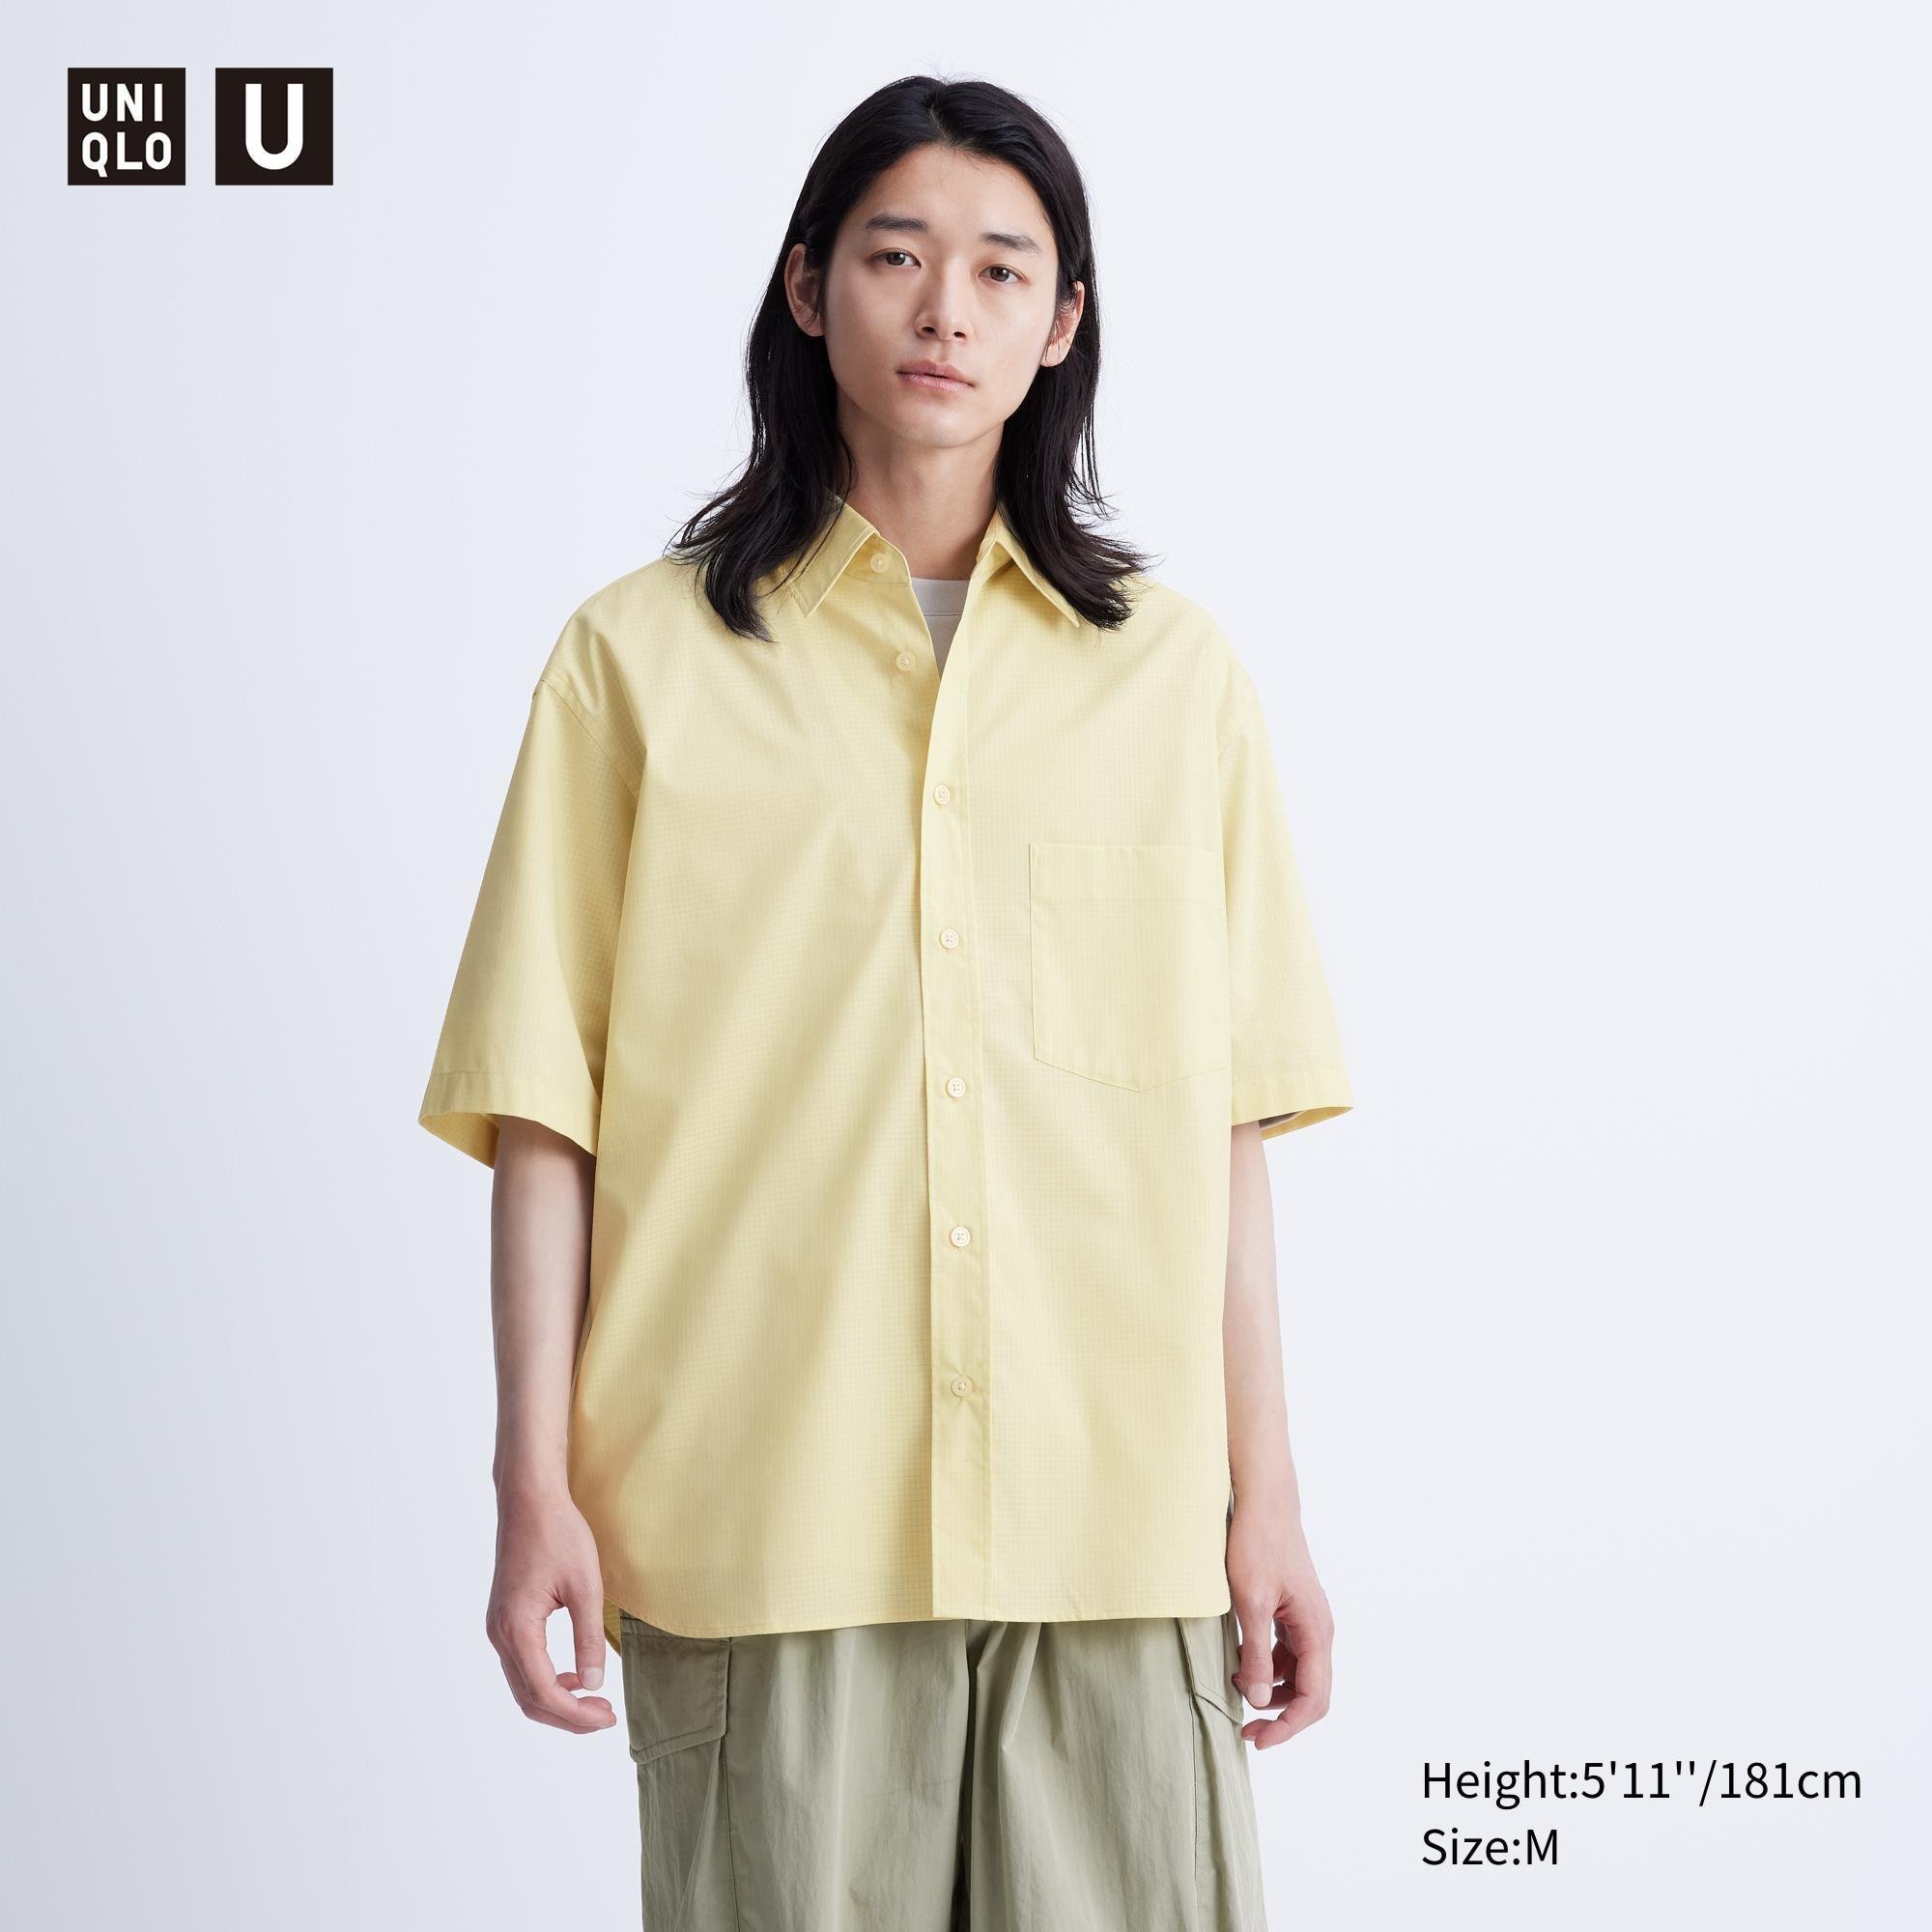 Oversized Half-Sleeve Overshirt by UNIQLO